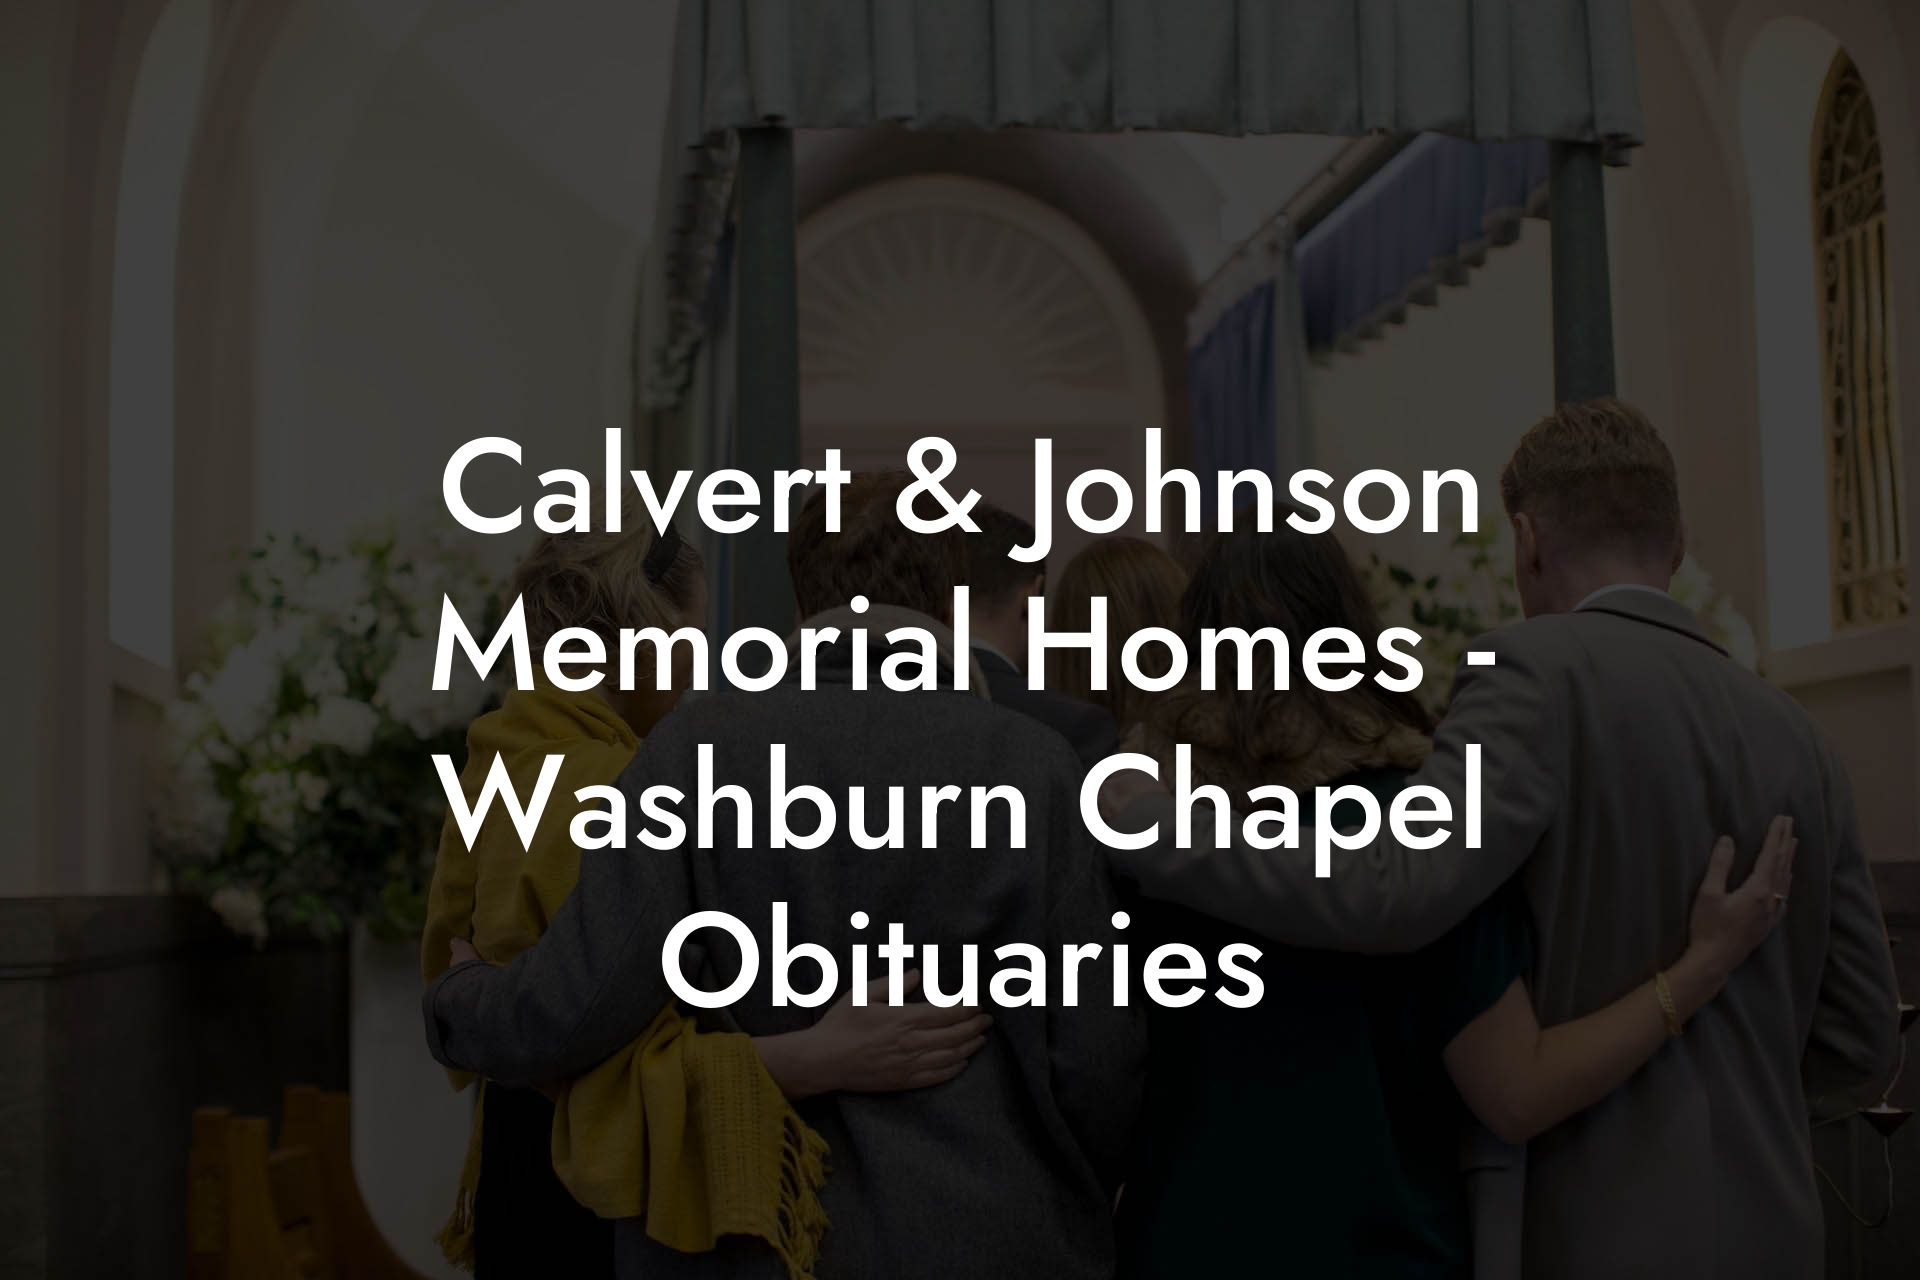 Calvert & Johnson Memorial Homes - Washburn Chapel Obituaries